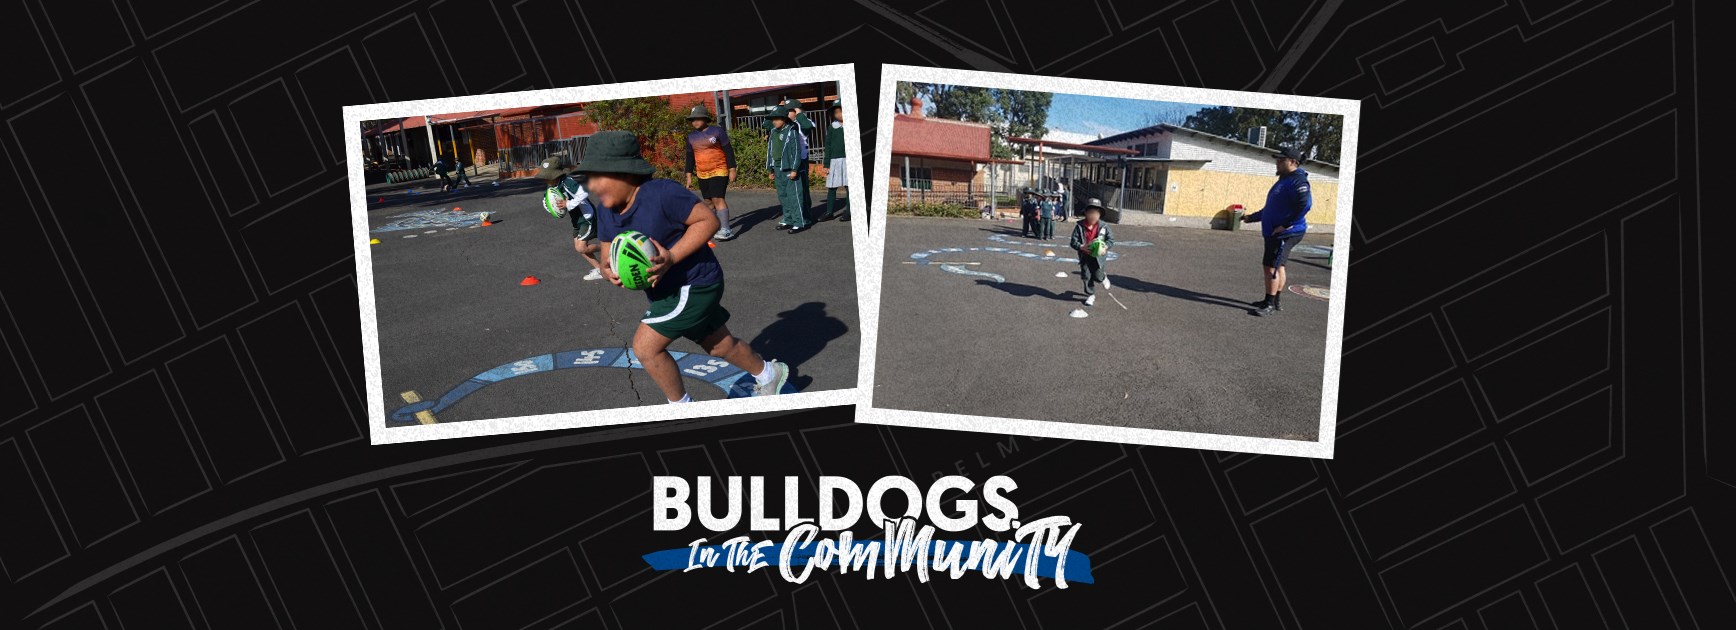 Bulldogs in the Community - Wiley Park Public School